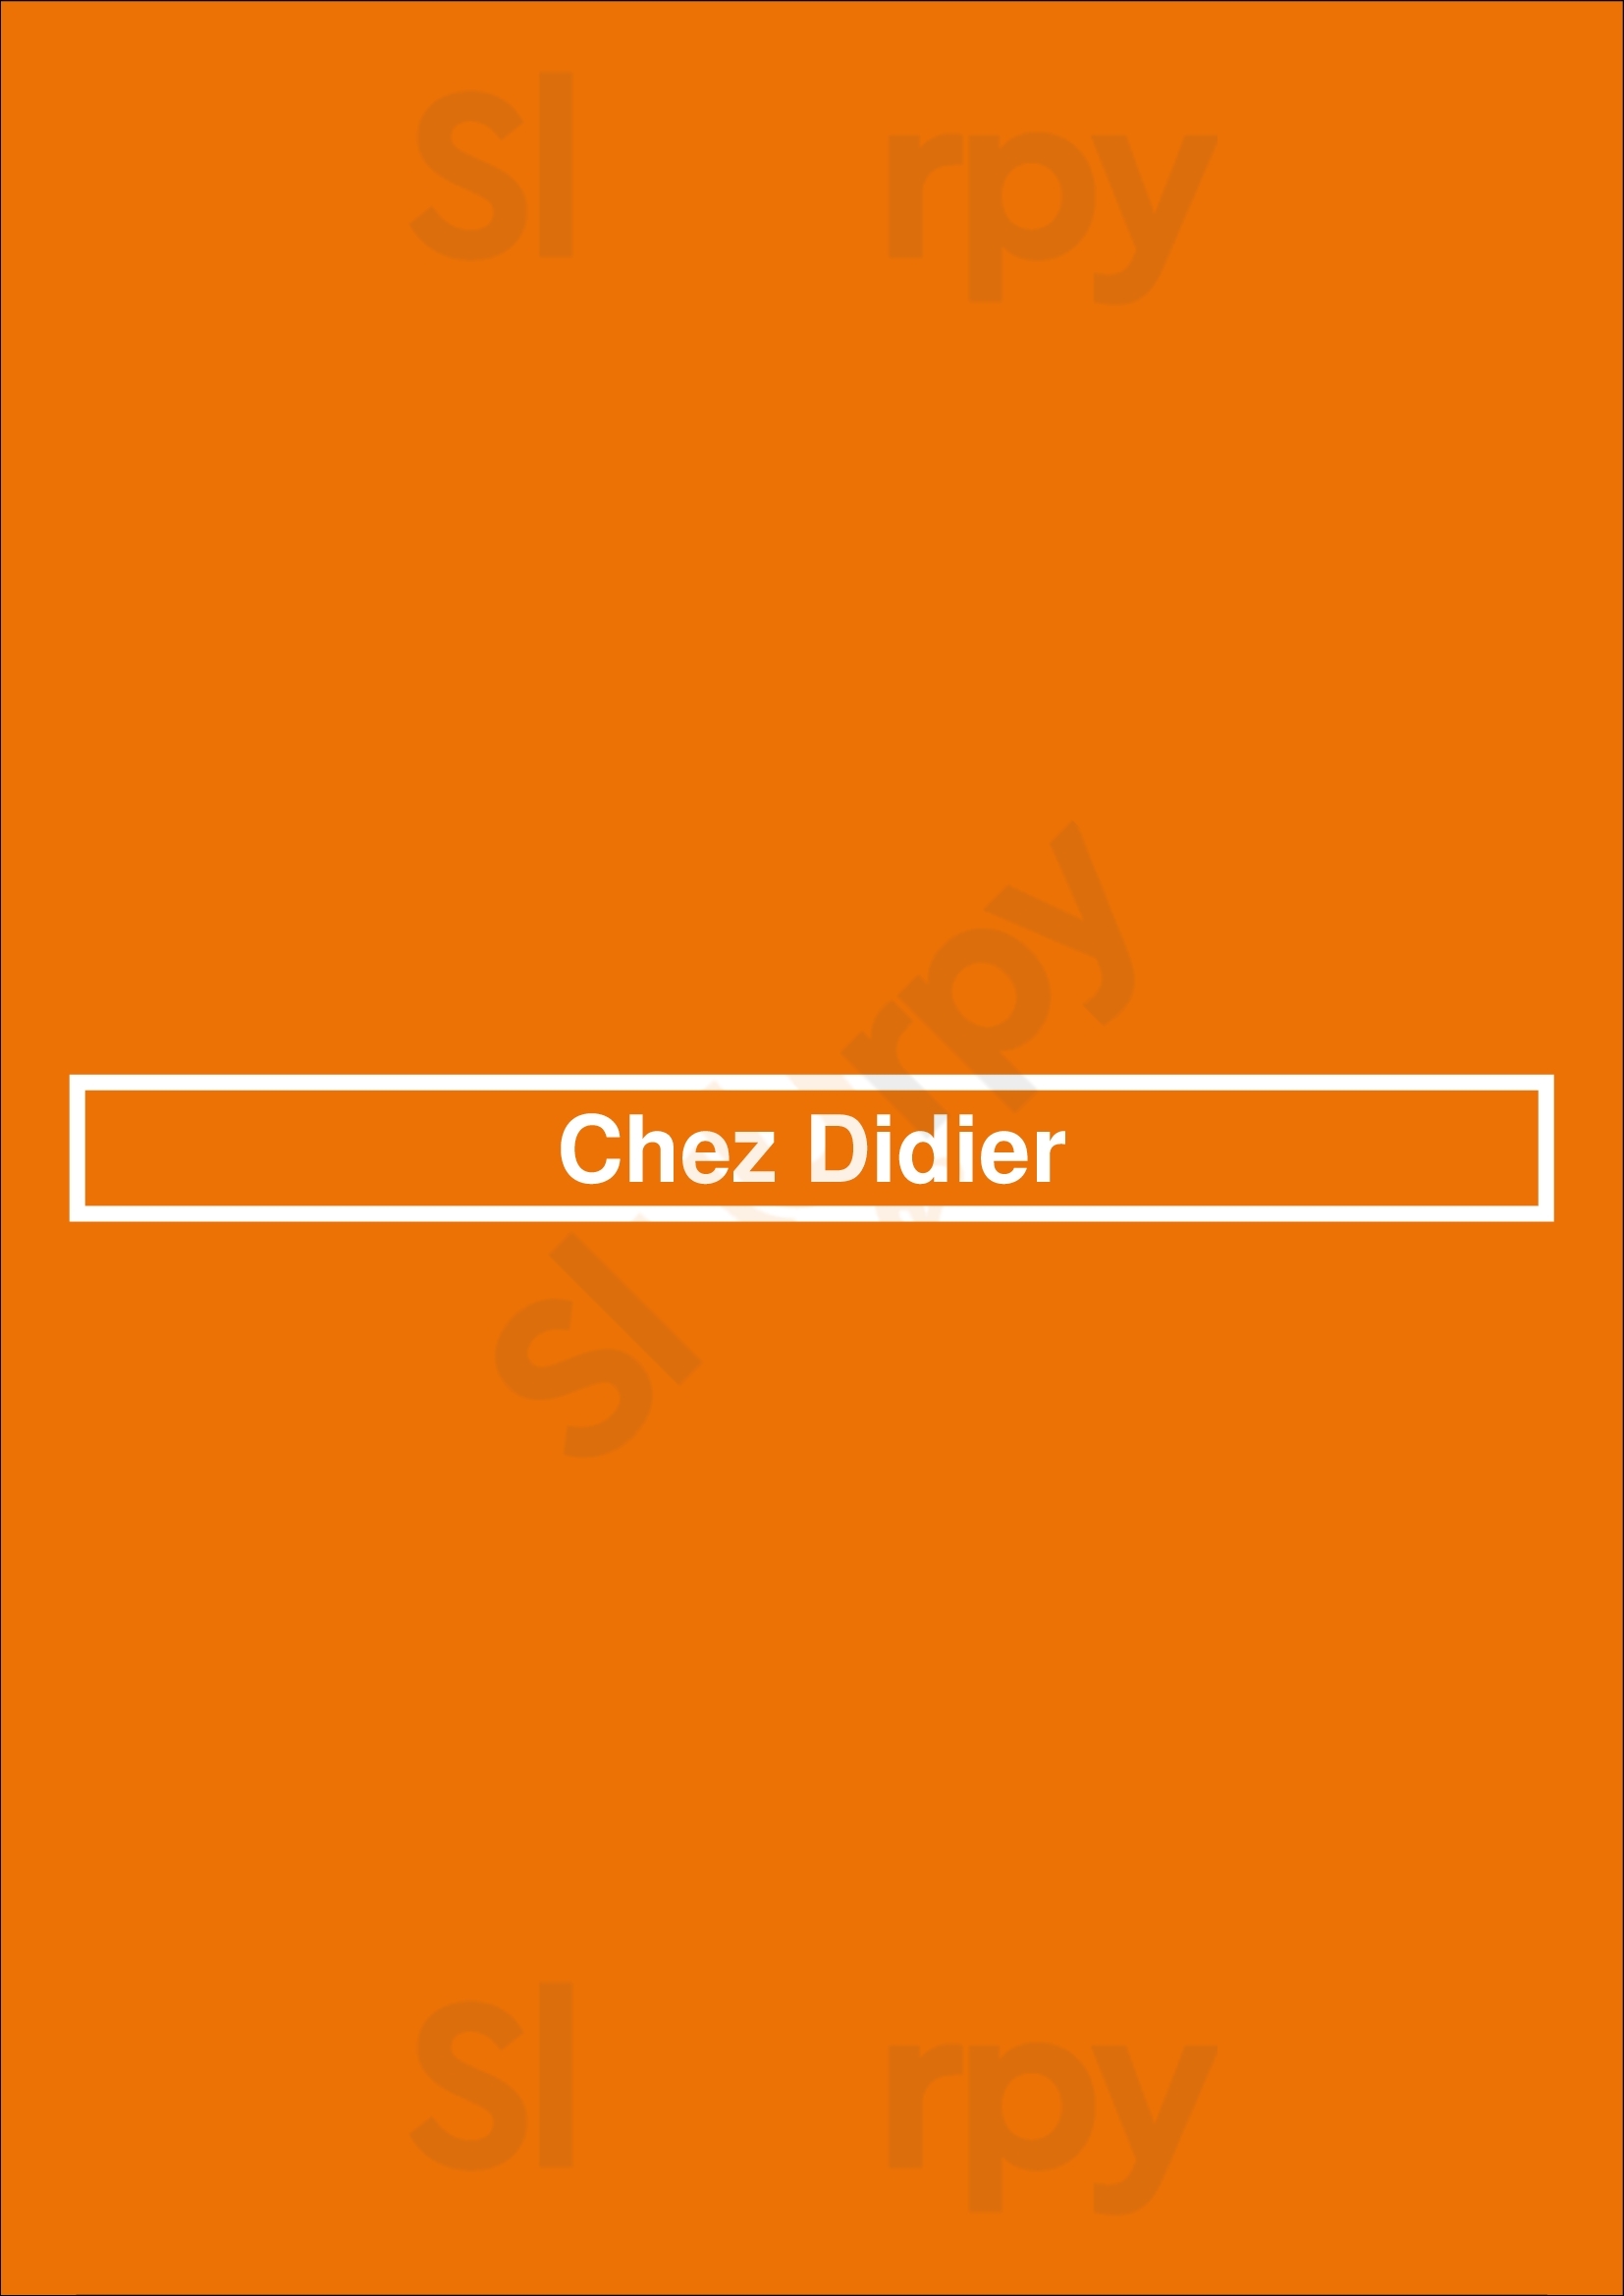 Chez Didier Verviers Menu - 1